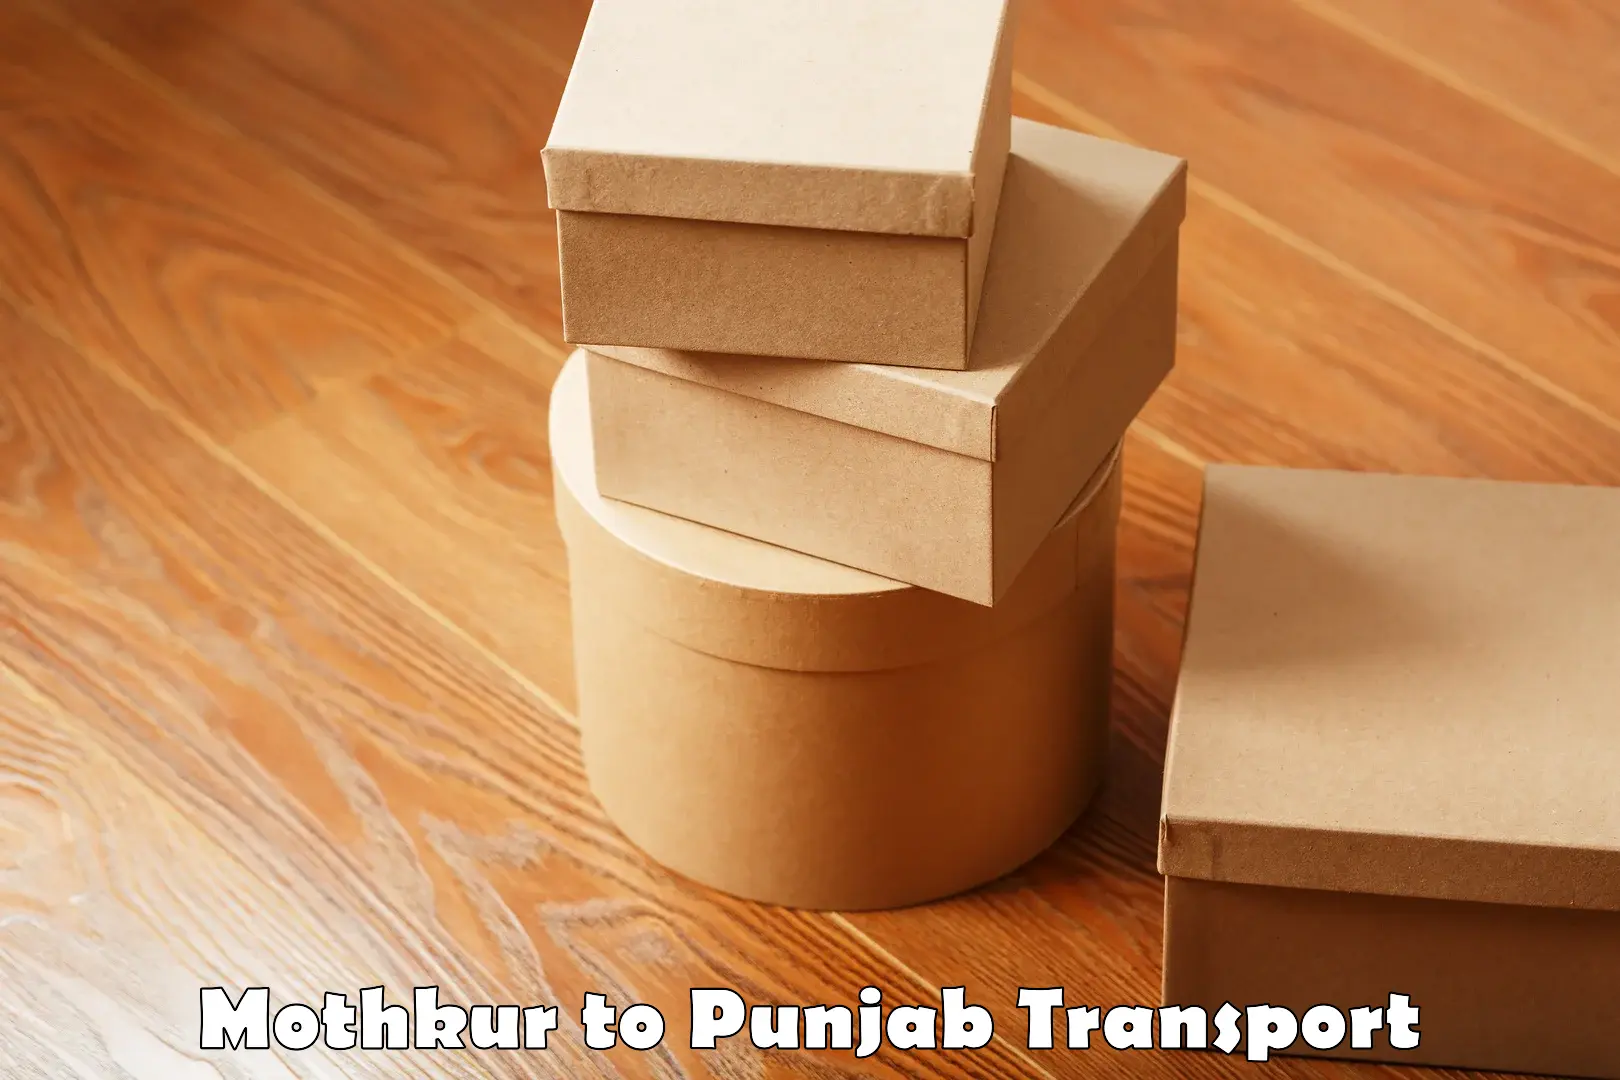 Daily transport service Mothkur to Punjab